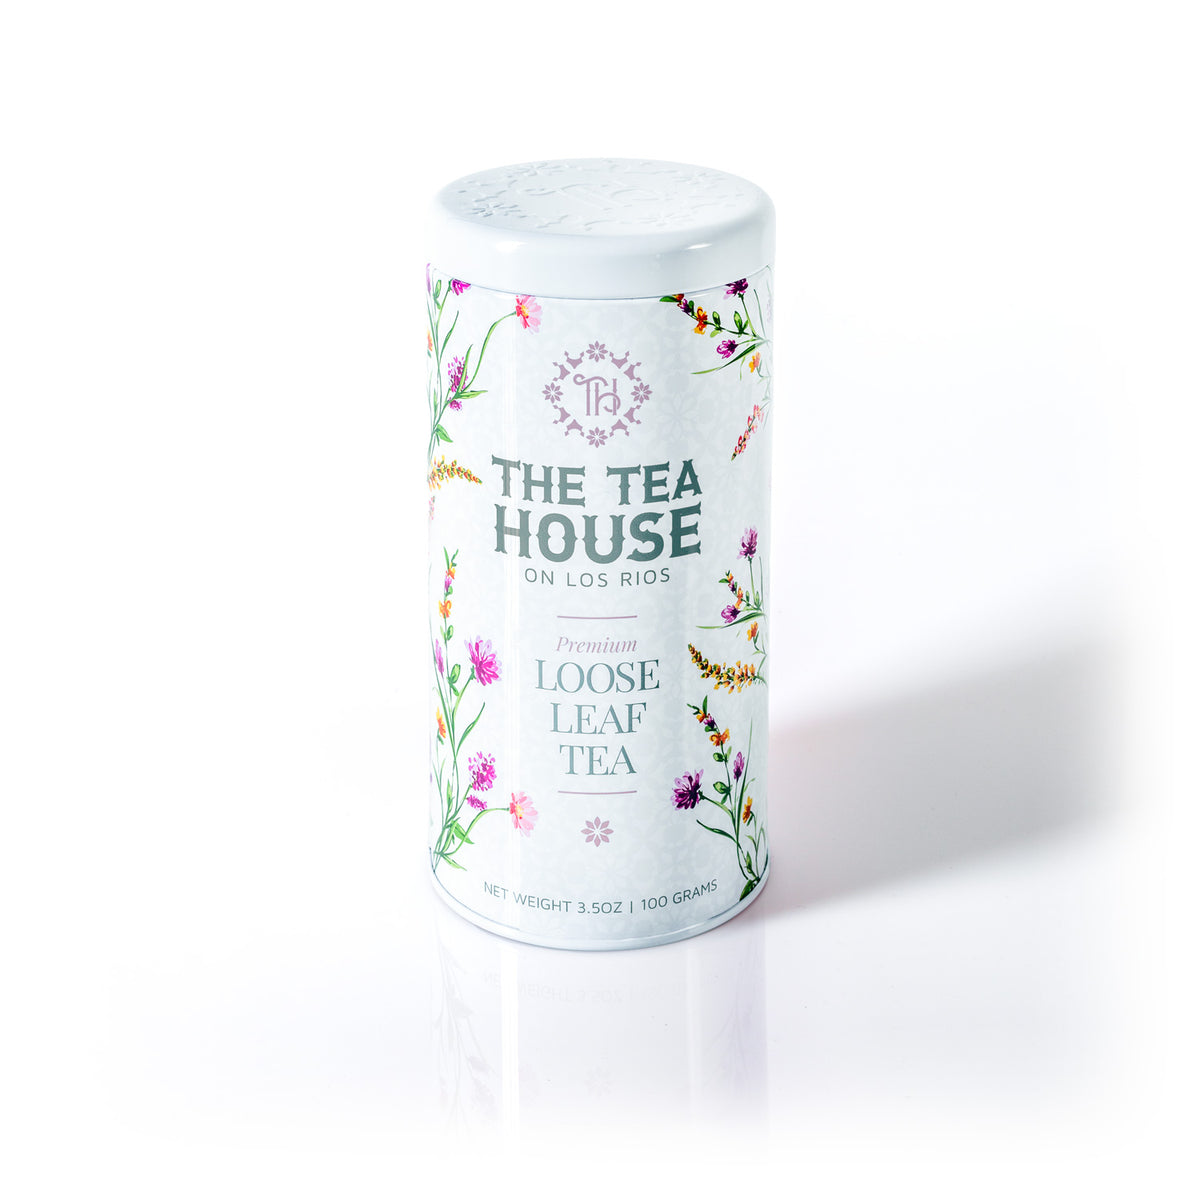 100g Loose Leaf Tea Tin - NEW from The Tea House on Los Rios